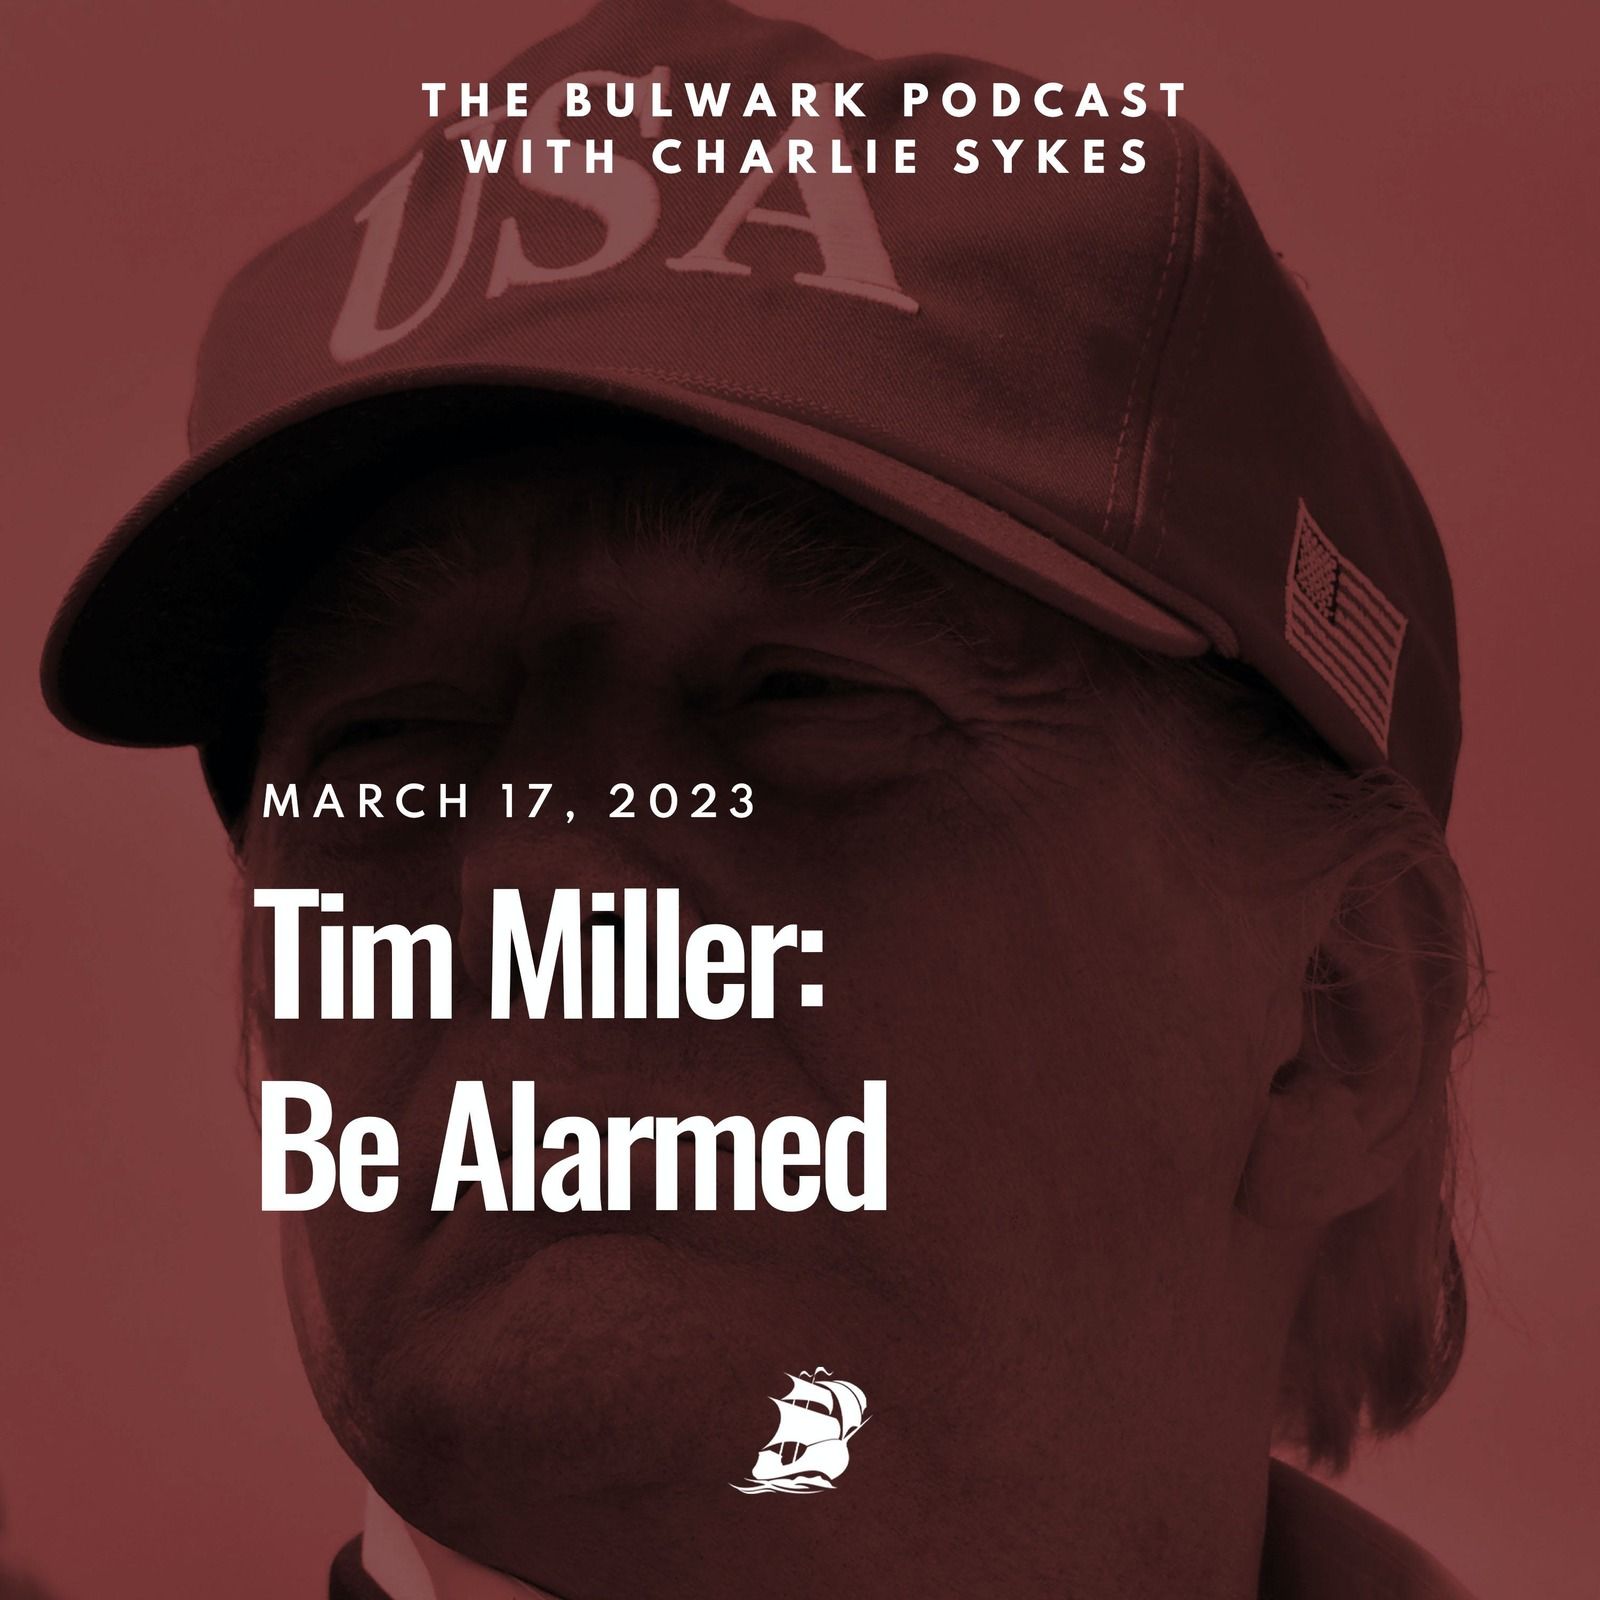 Tim Miller: Be Alarmed by The Bulwark Podcast